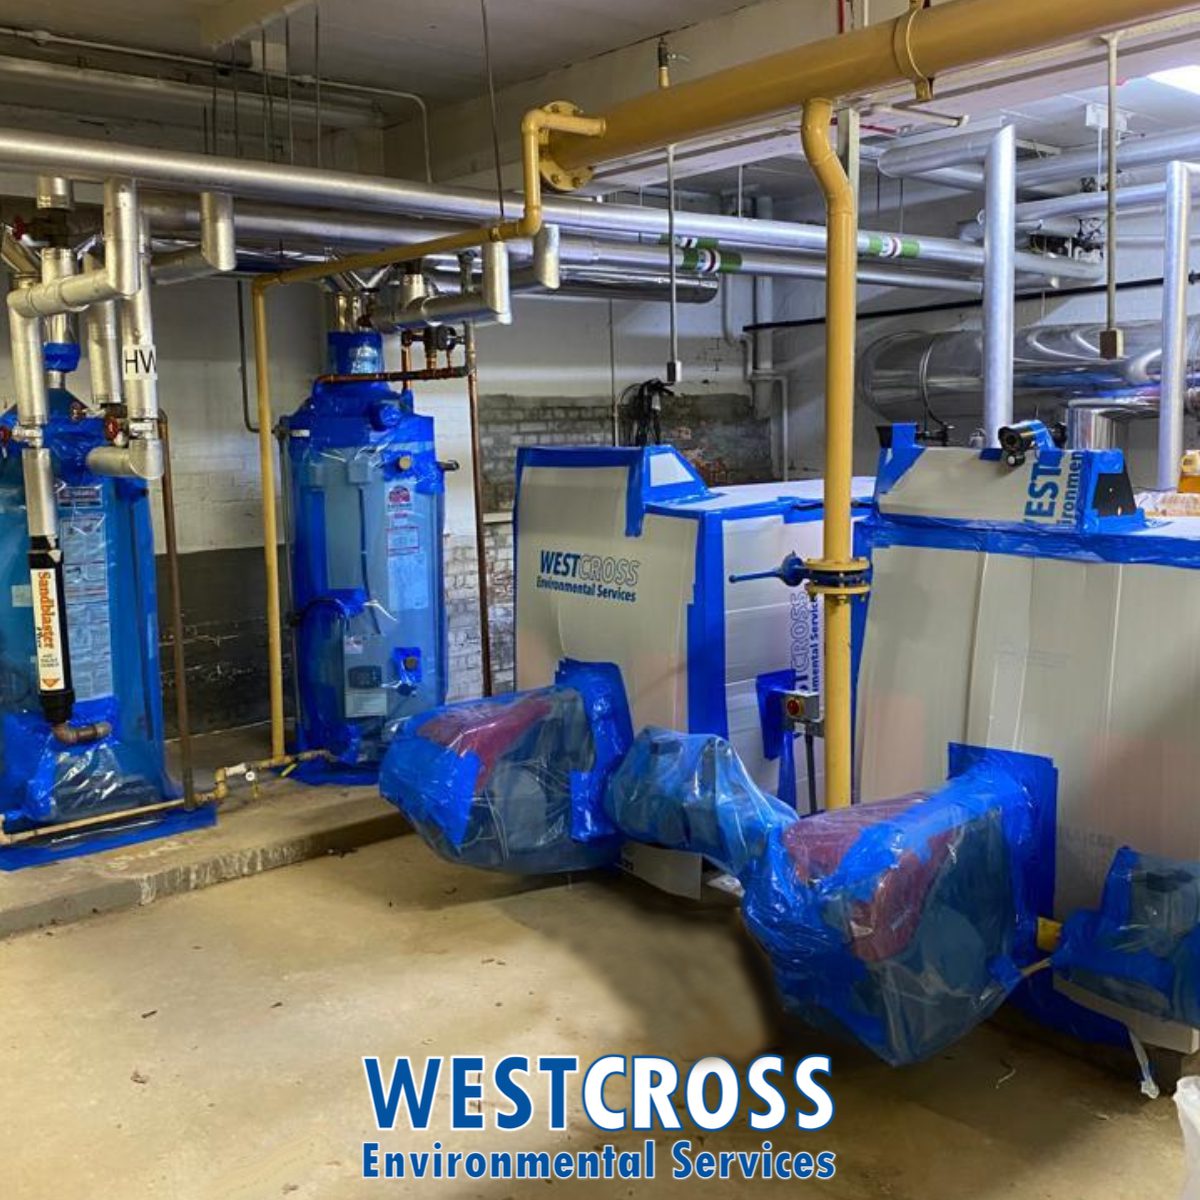 Westcross environmental services